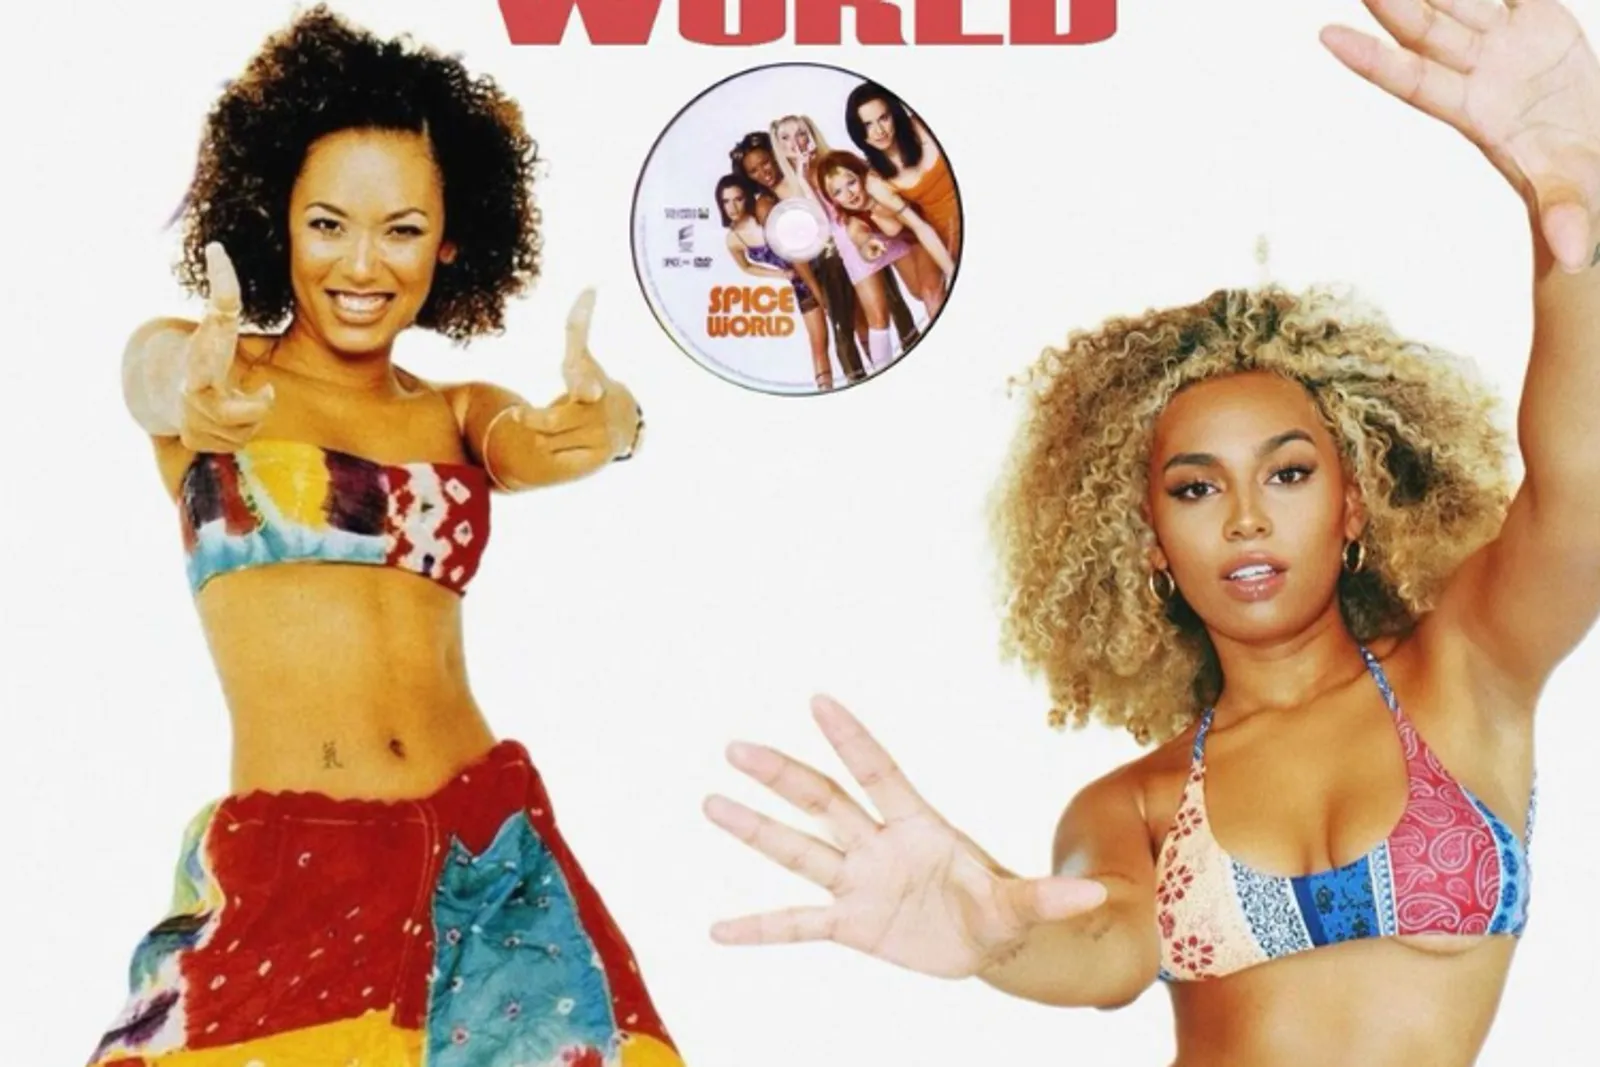 Anak Mel B 'Spice Girls' Tiru Gaya Ikonik Sang Ibu yang Hits Era 90-an